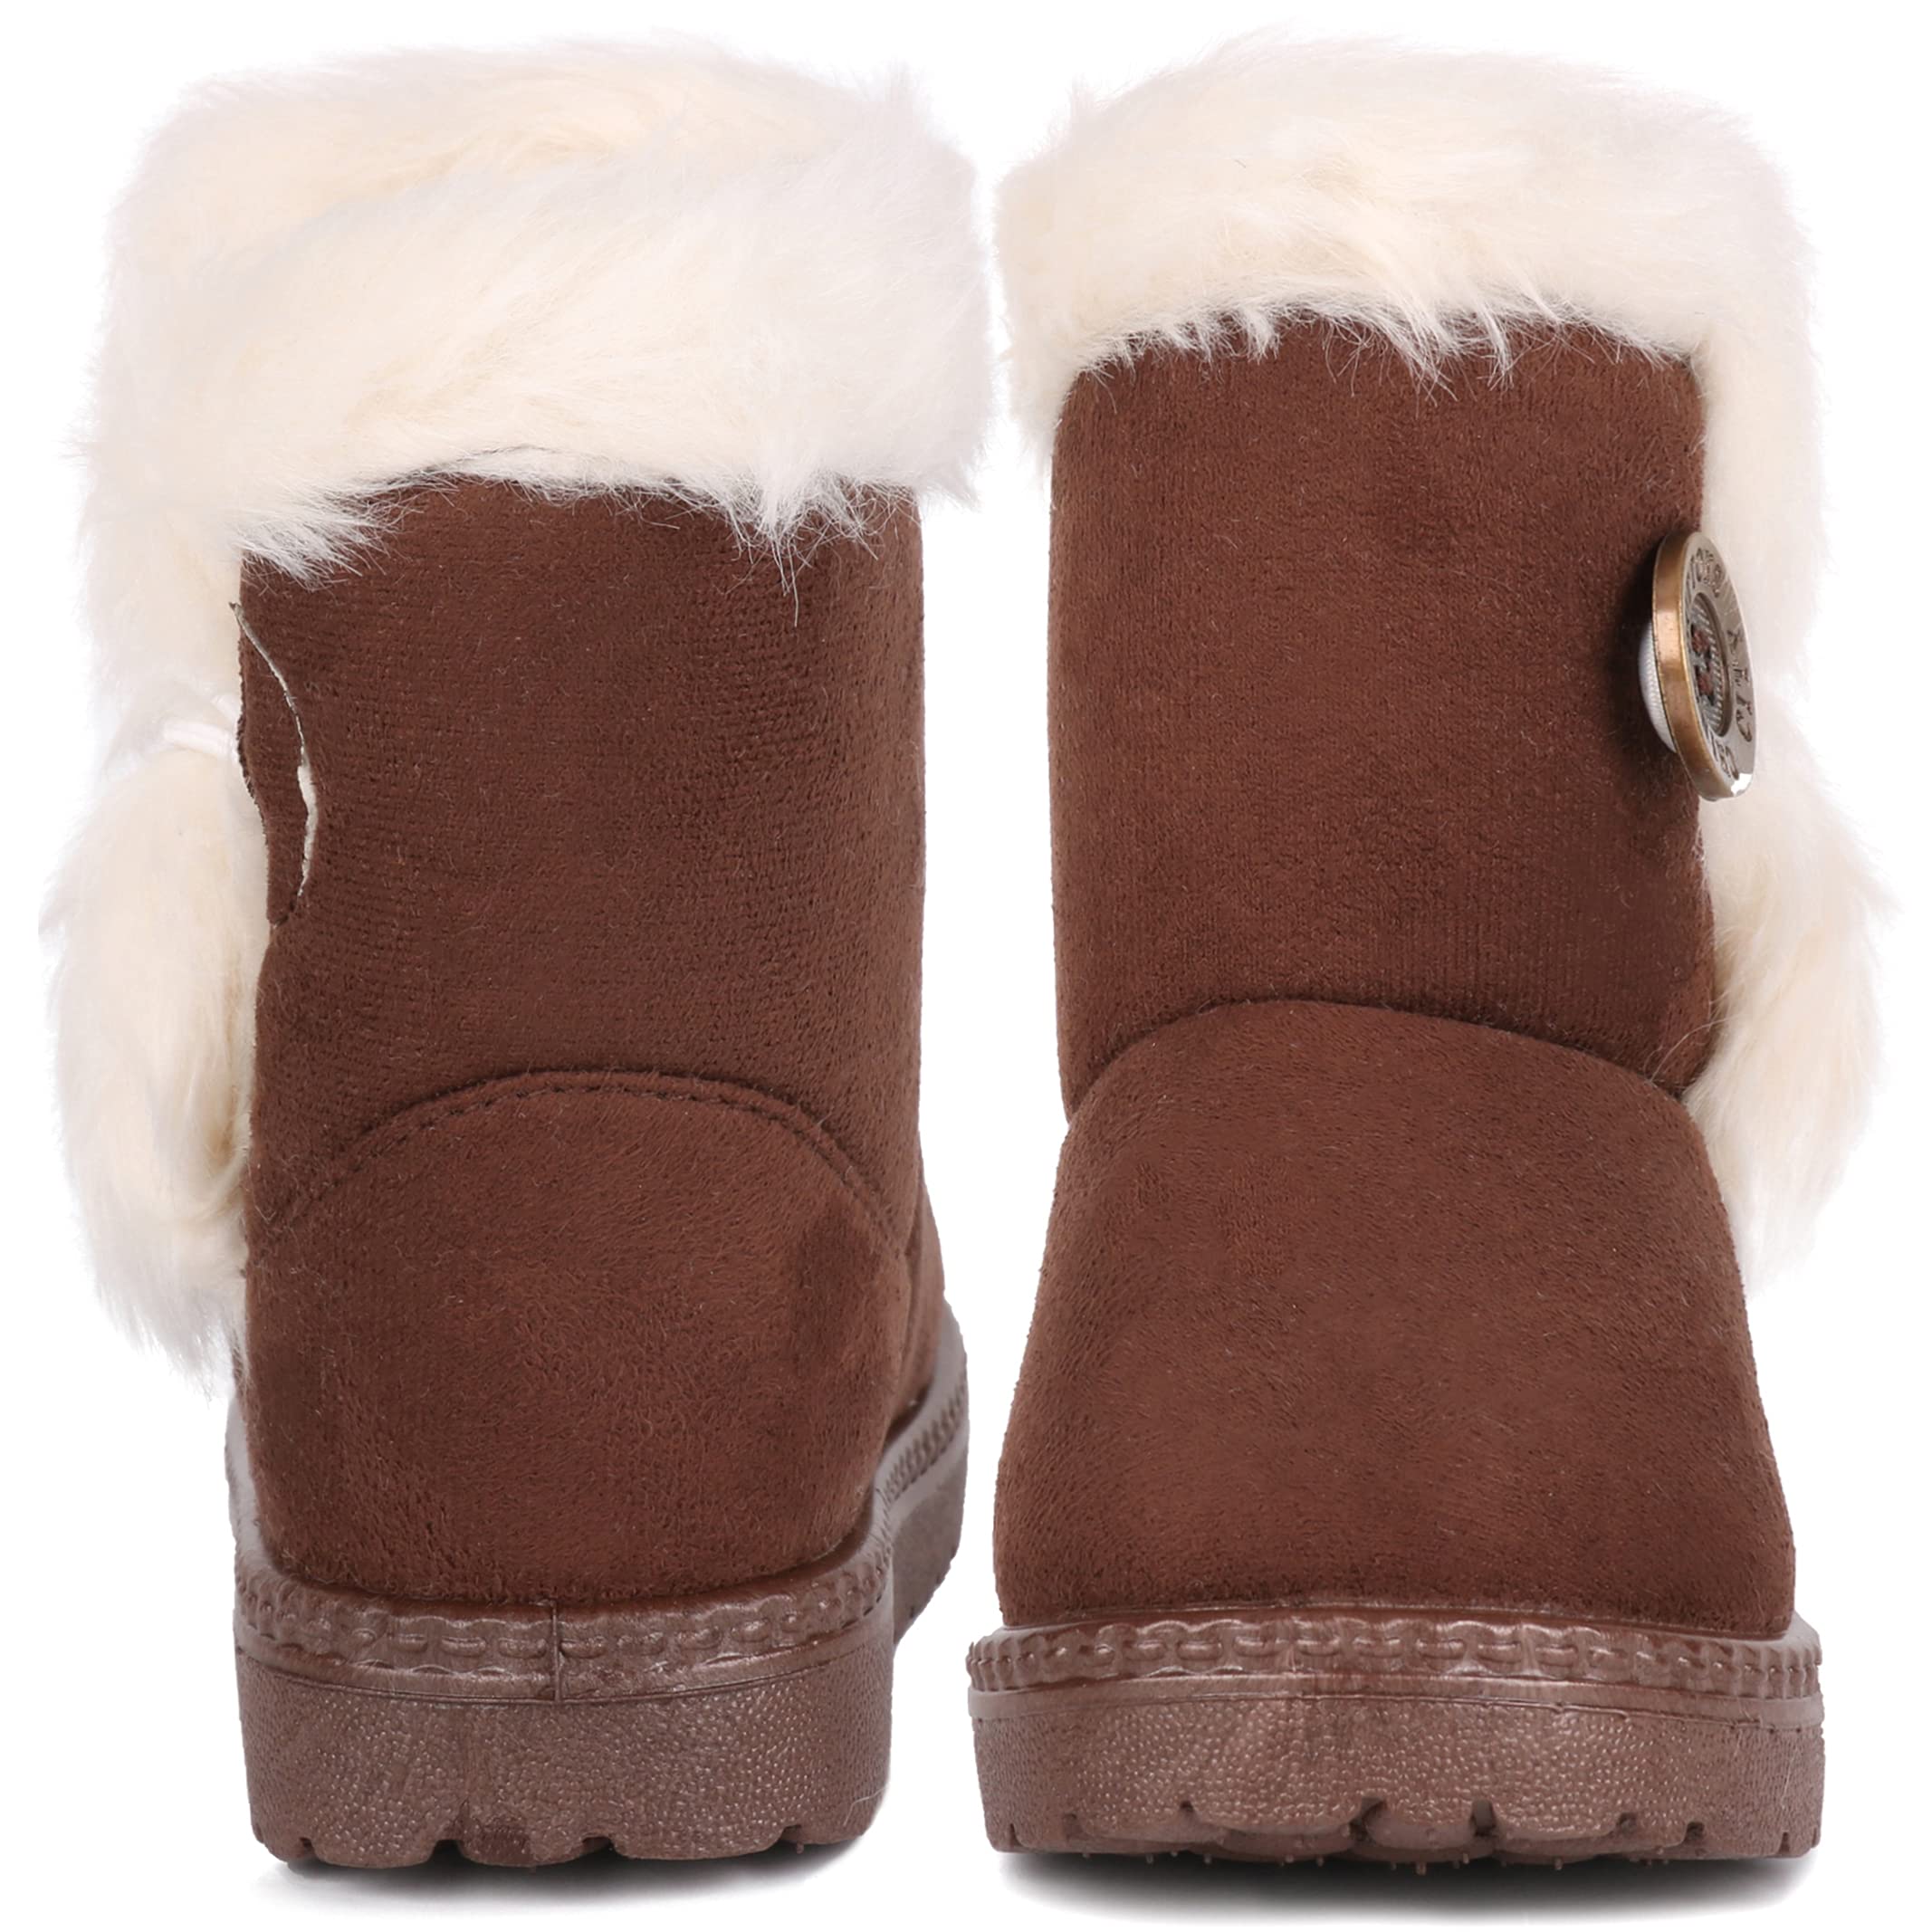 Femizee Girls Boys Warm Winter Boots Kids Outdoor Snow Boots(Toddler/Little Kid)